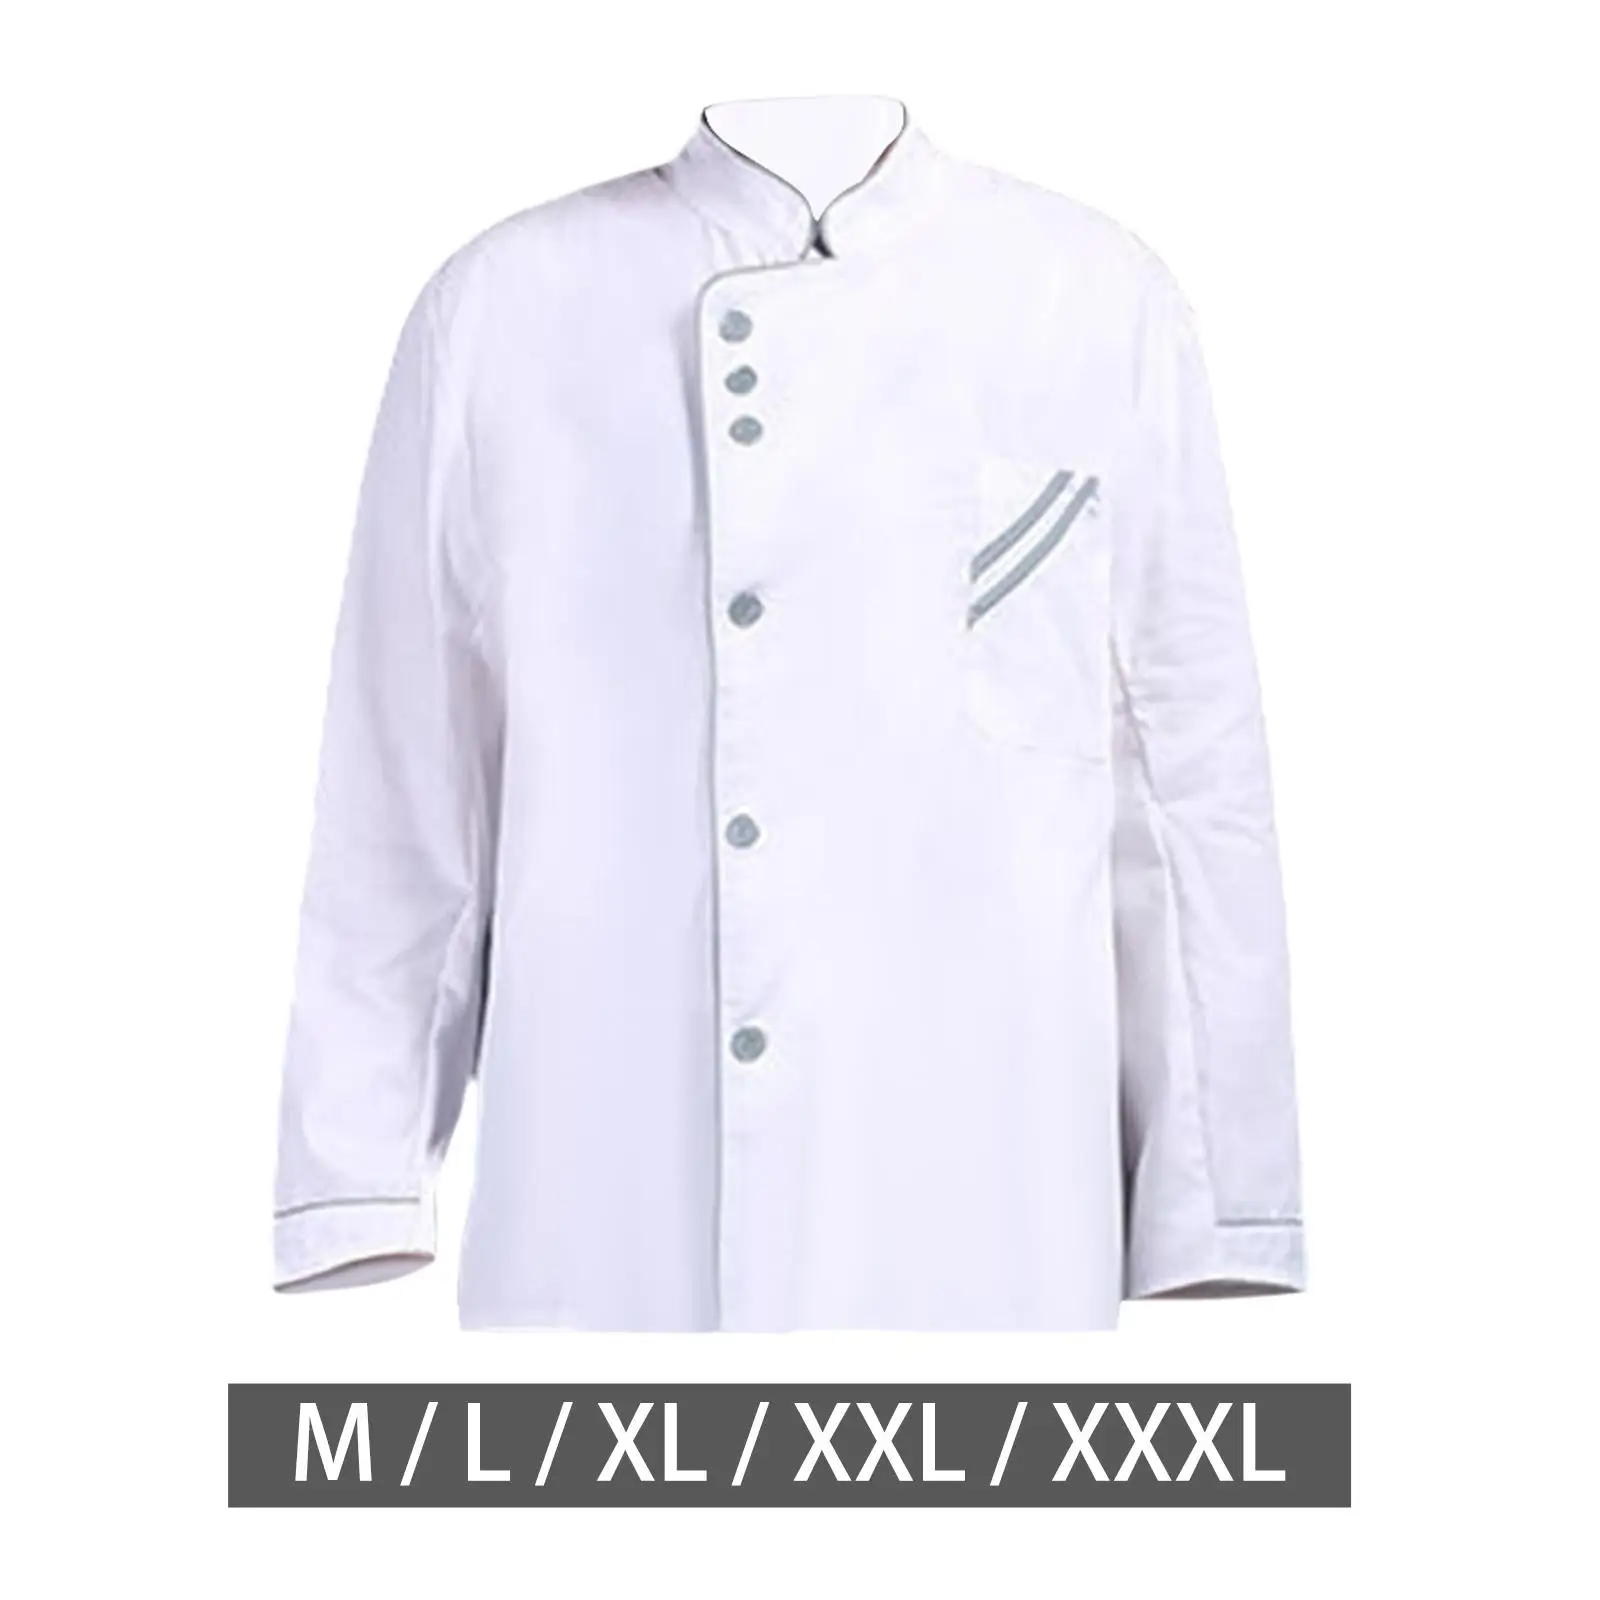 Men Women Chef Coat Jacket Cooker Long Sleeve Waiter Apparel Uniform Chef Clothing Workwear for Cafe Kitchen Summer Food Service